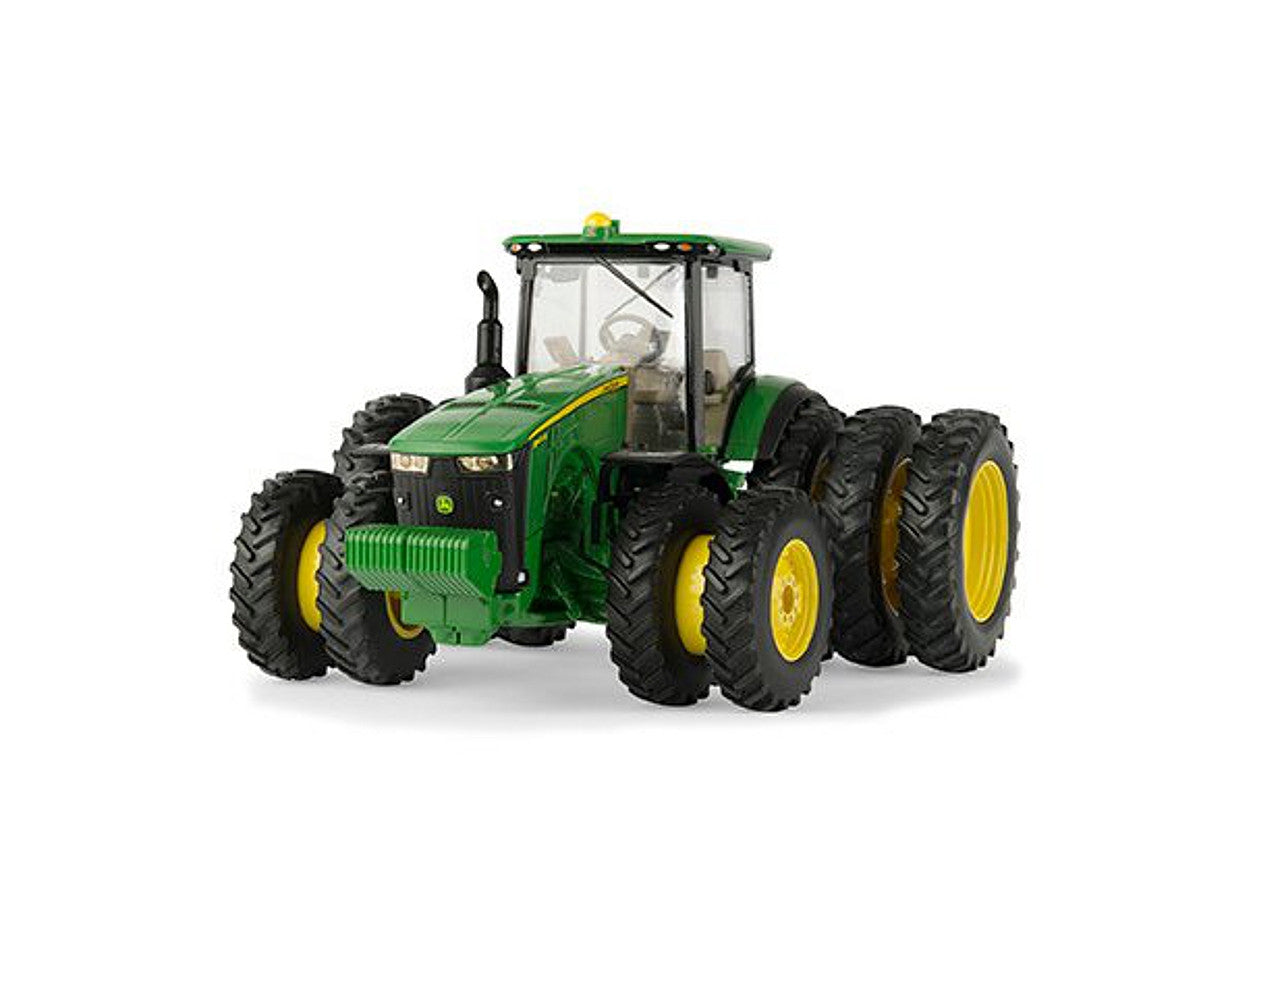 1/32 Scale John Deere 8400R Tractor Toy by Ertl #45568 - LP64767